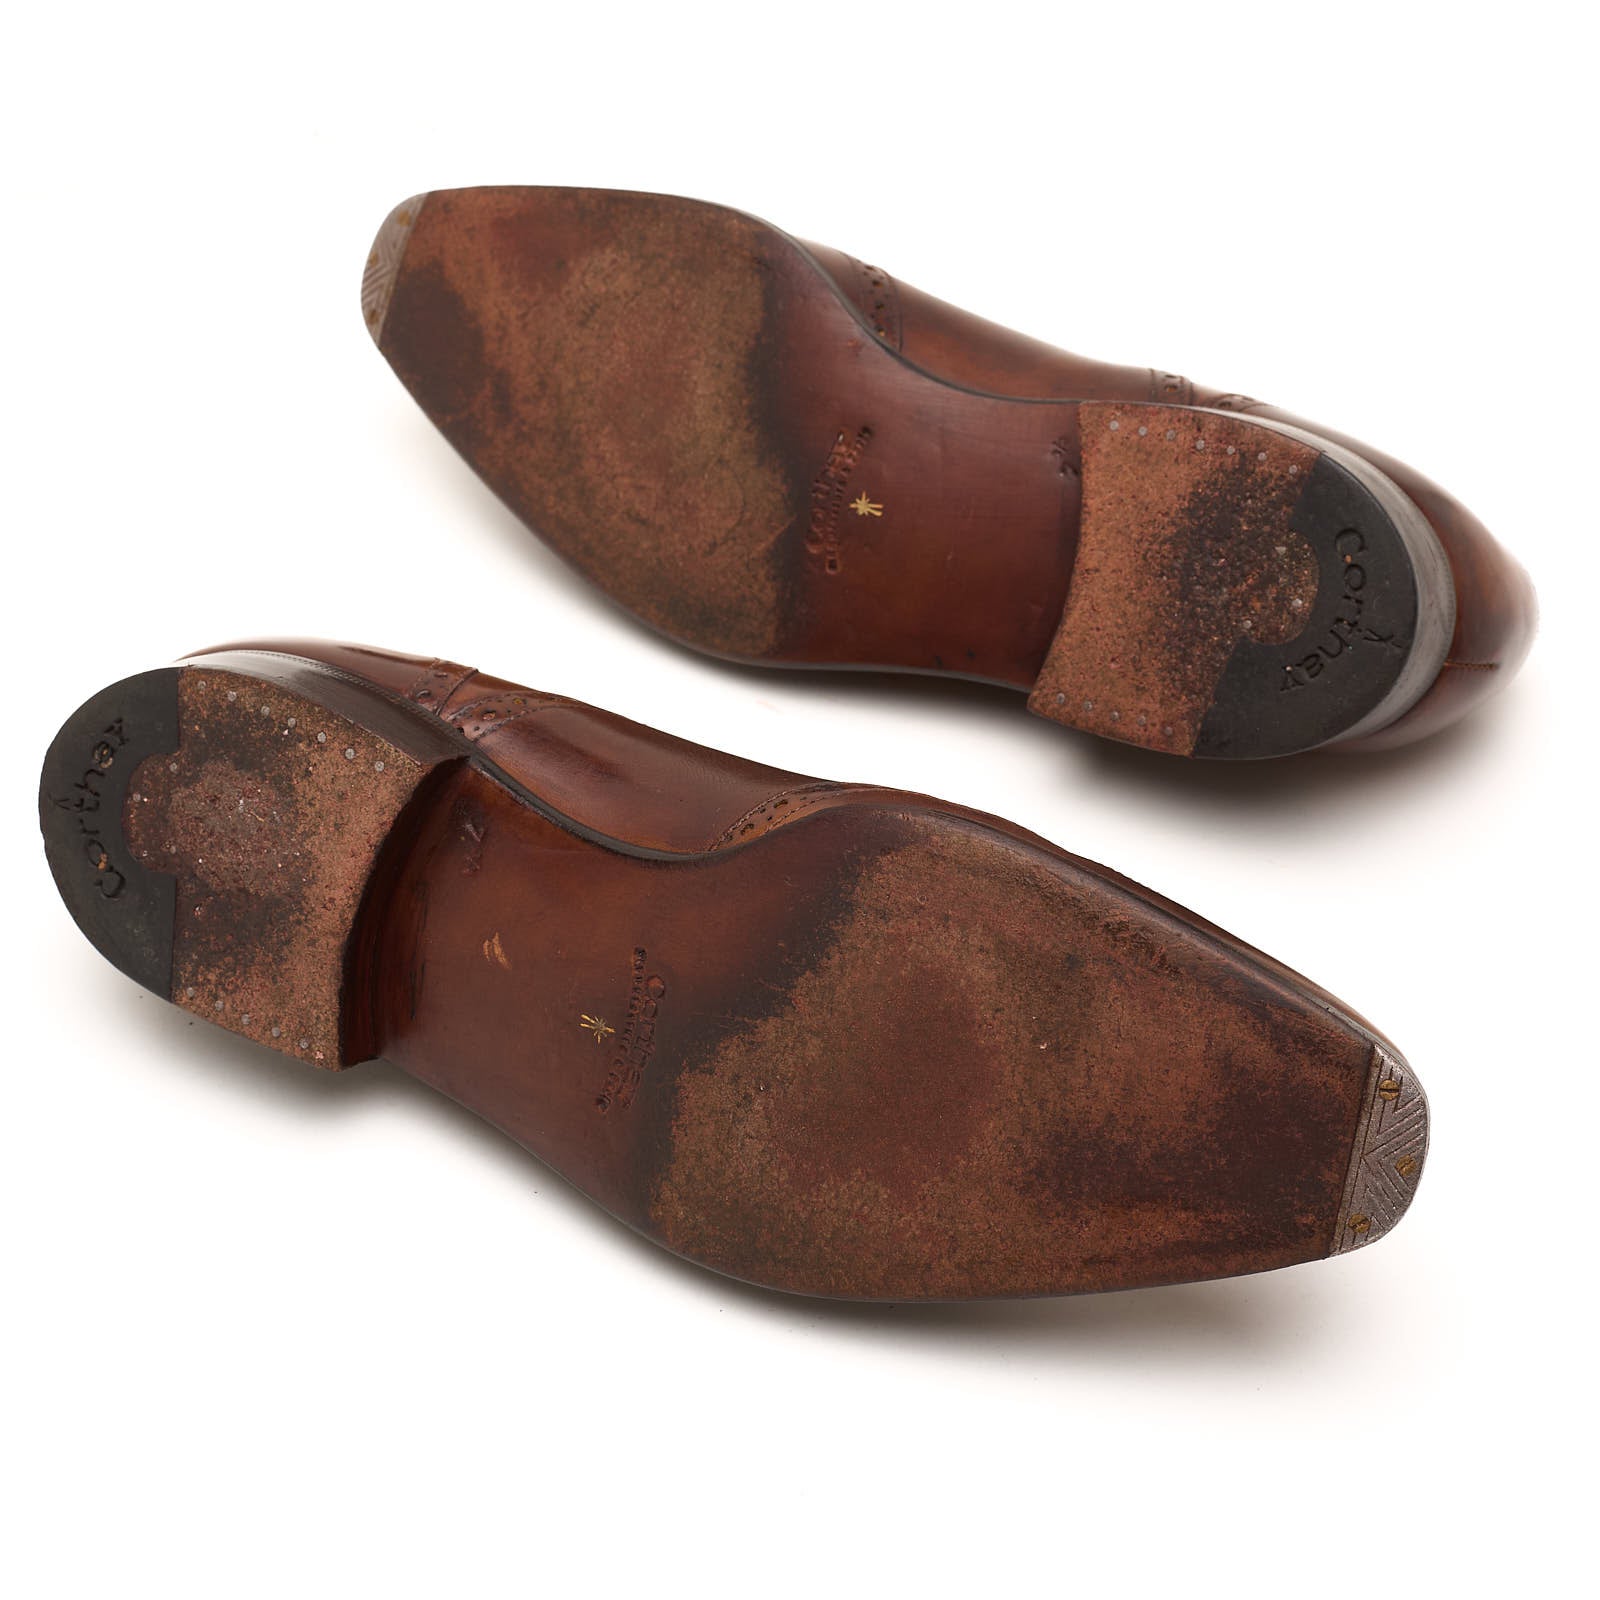 CORTHAY Paris "Vendome" Ebony Brown Calf Leather 5 Eyelet Oxford Shoes Size 7.5